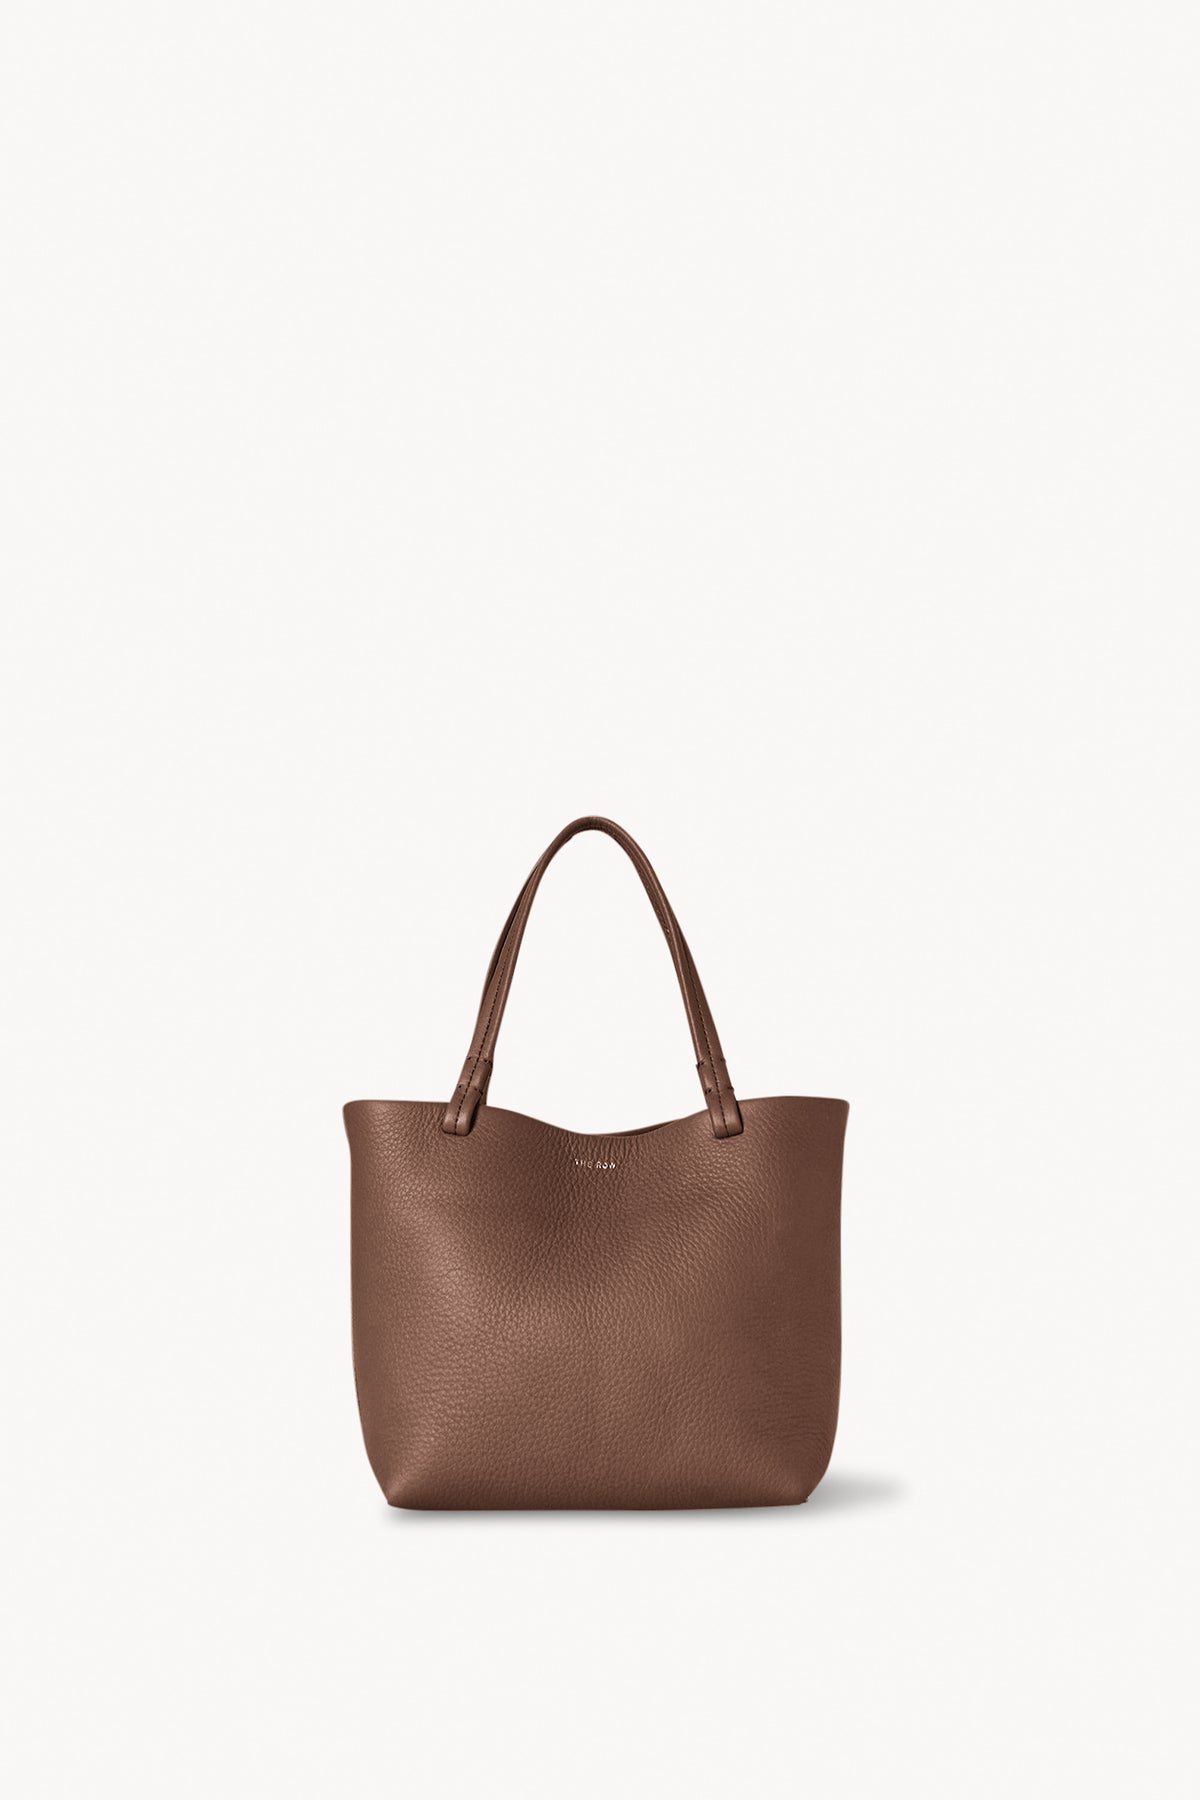 Tan Leather Tote Bag